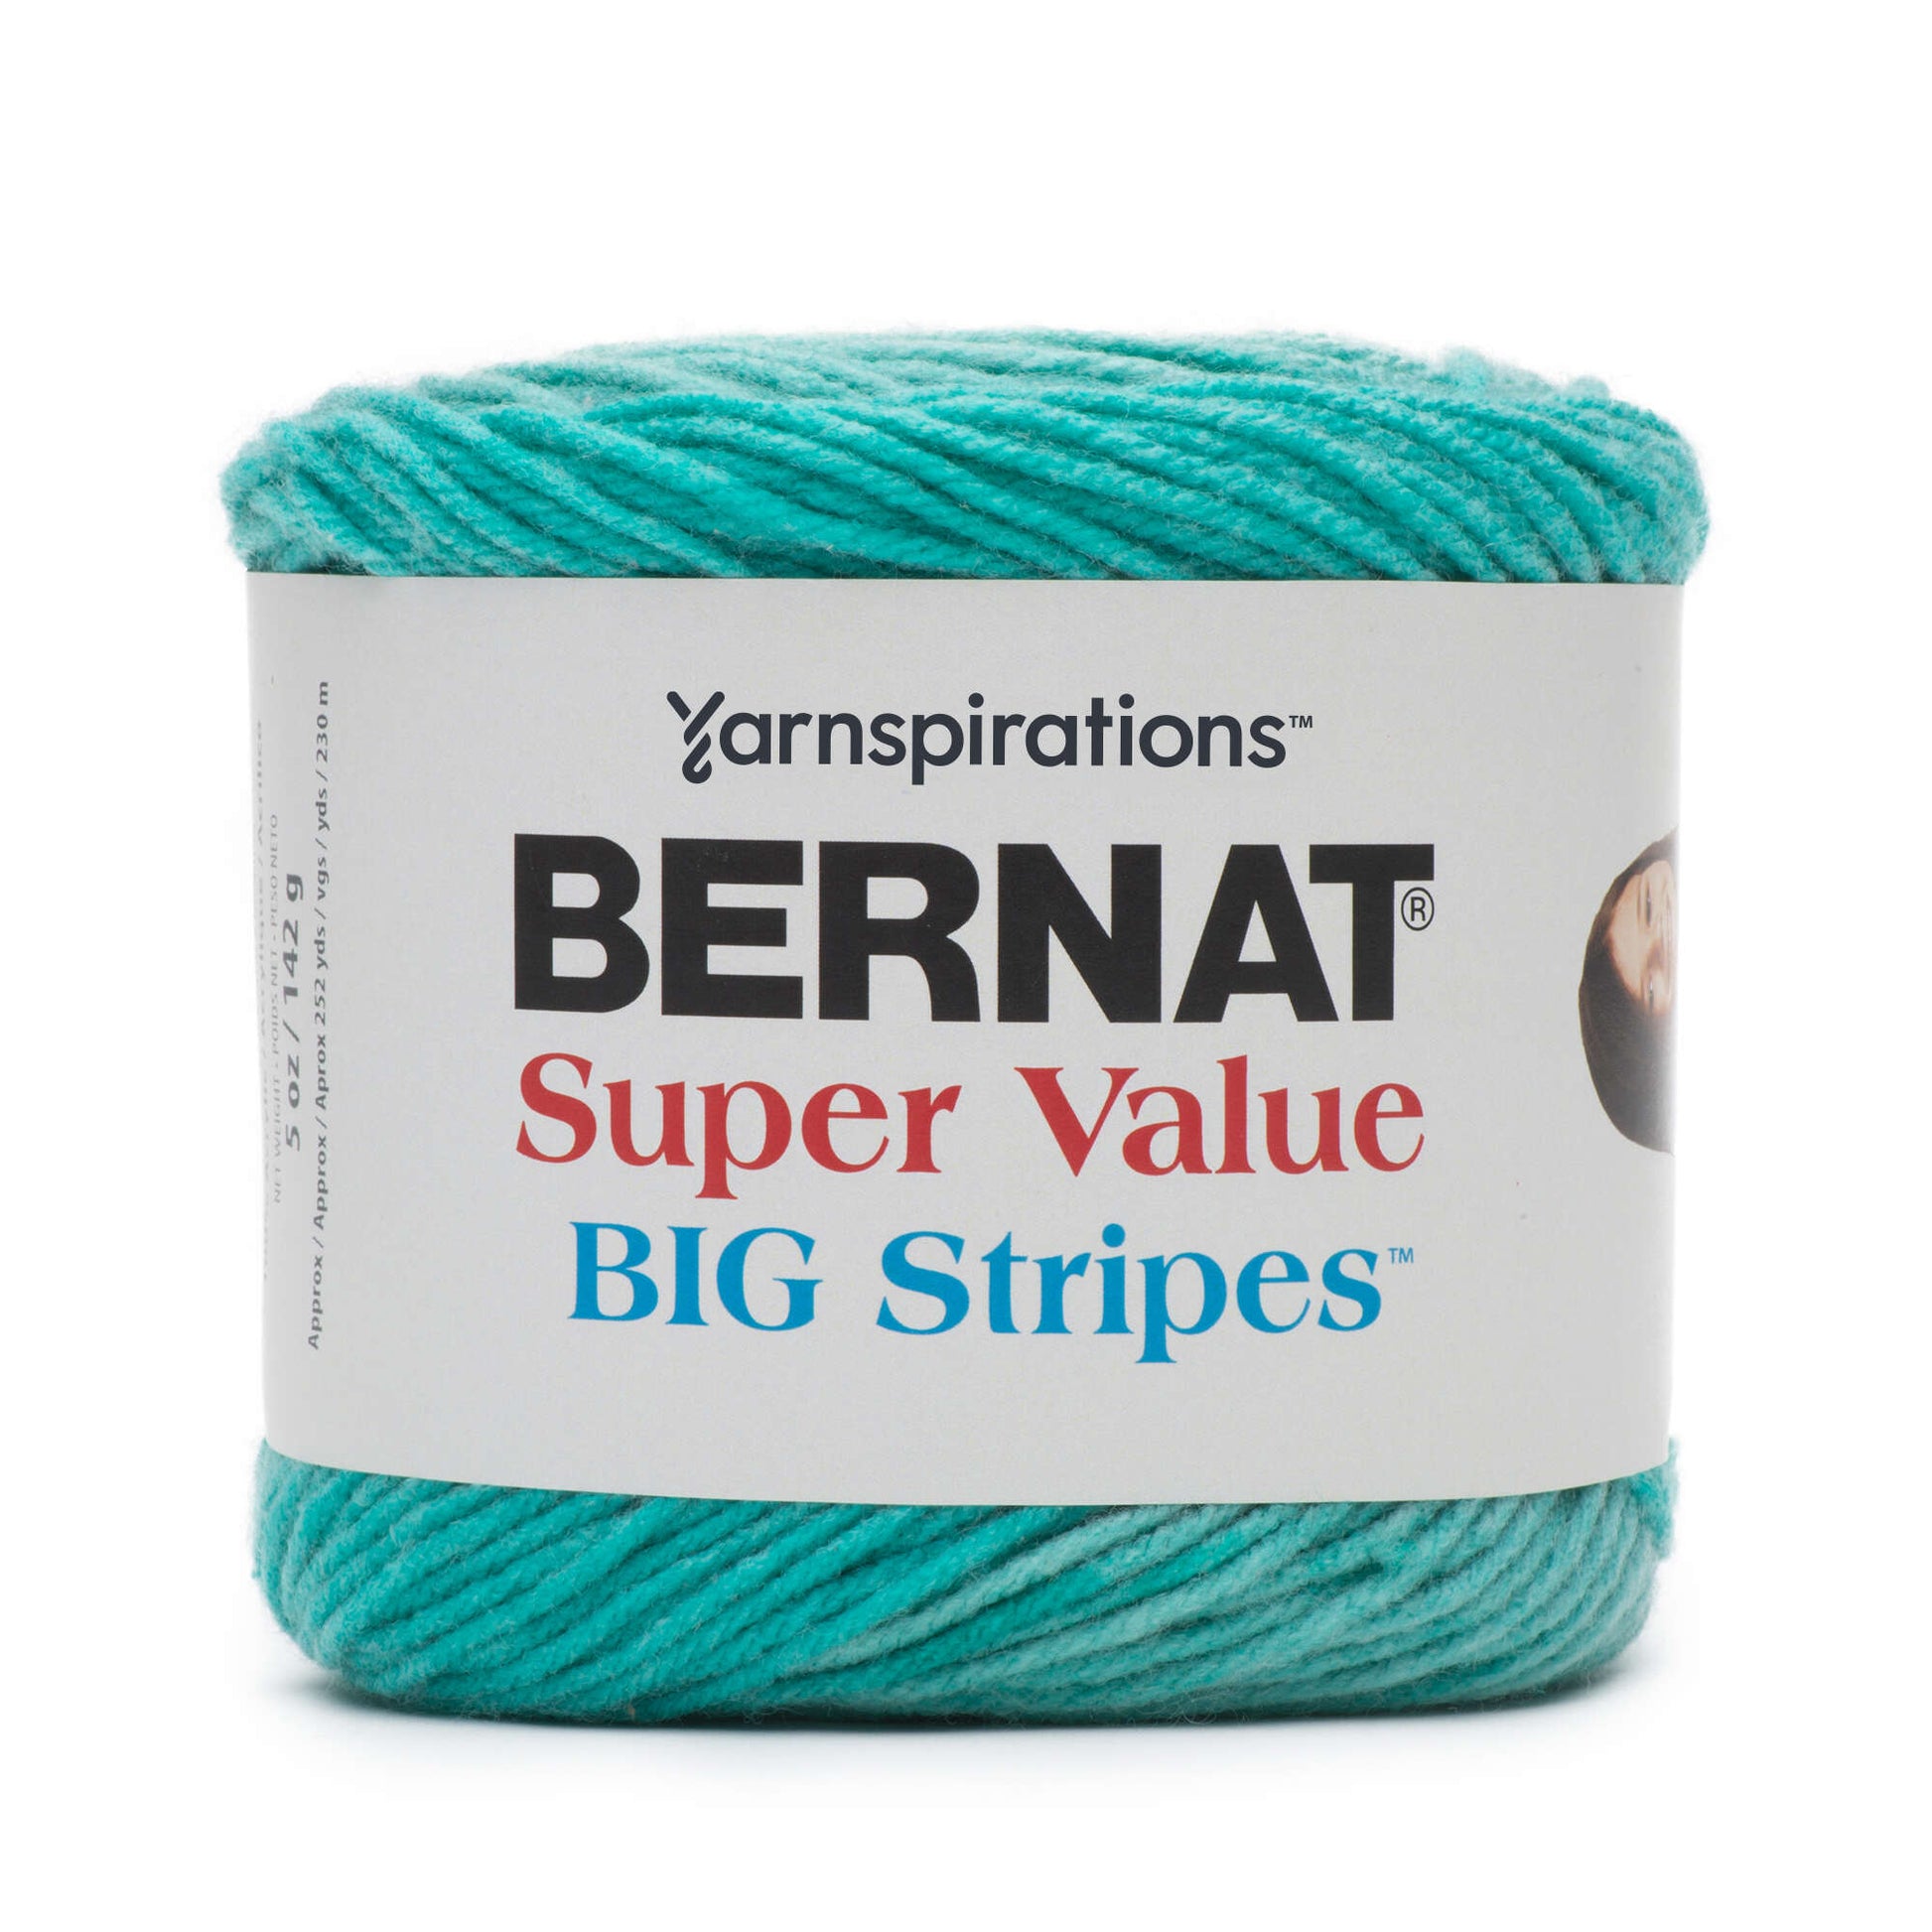 Bernat Super Value Big Stripes Yarn - Discontinued Shades Deep Seas